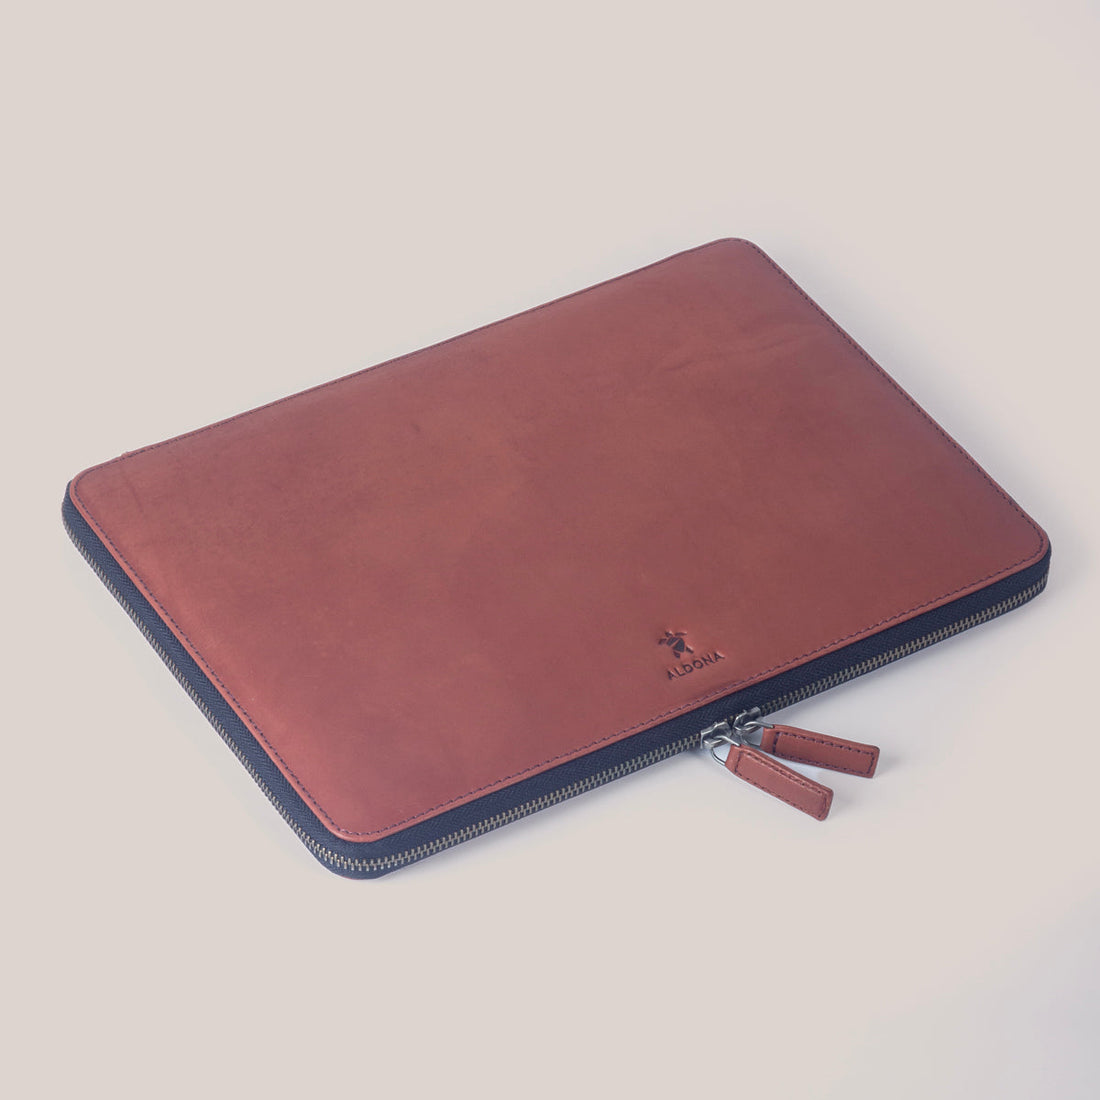 Microsoft Surface Laptop 15 Zippered Laptop Case - Felt and Tan Crunch